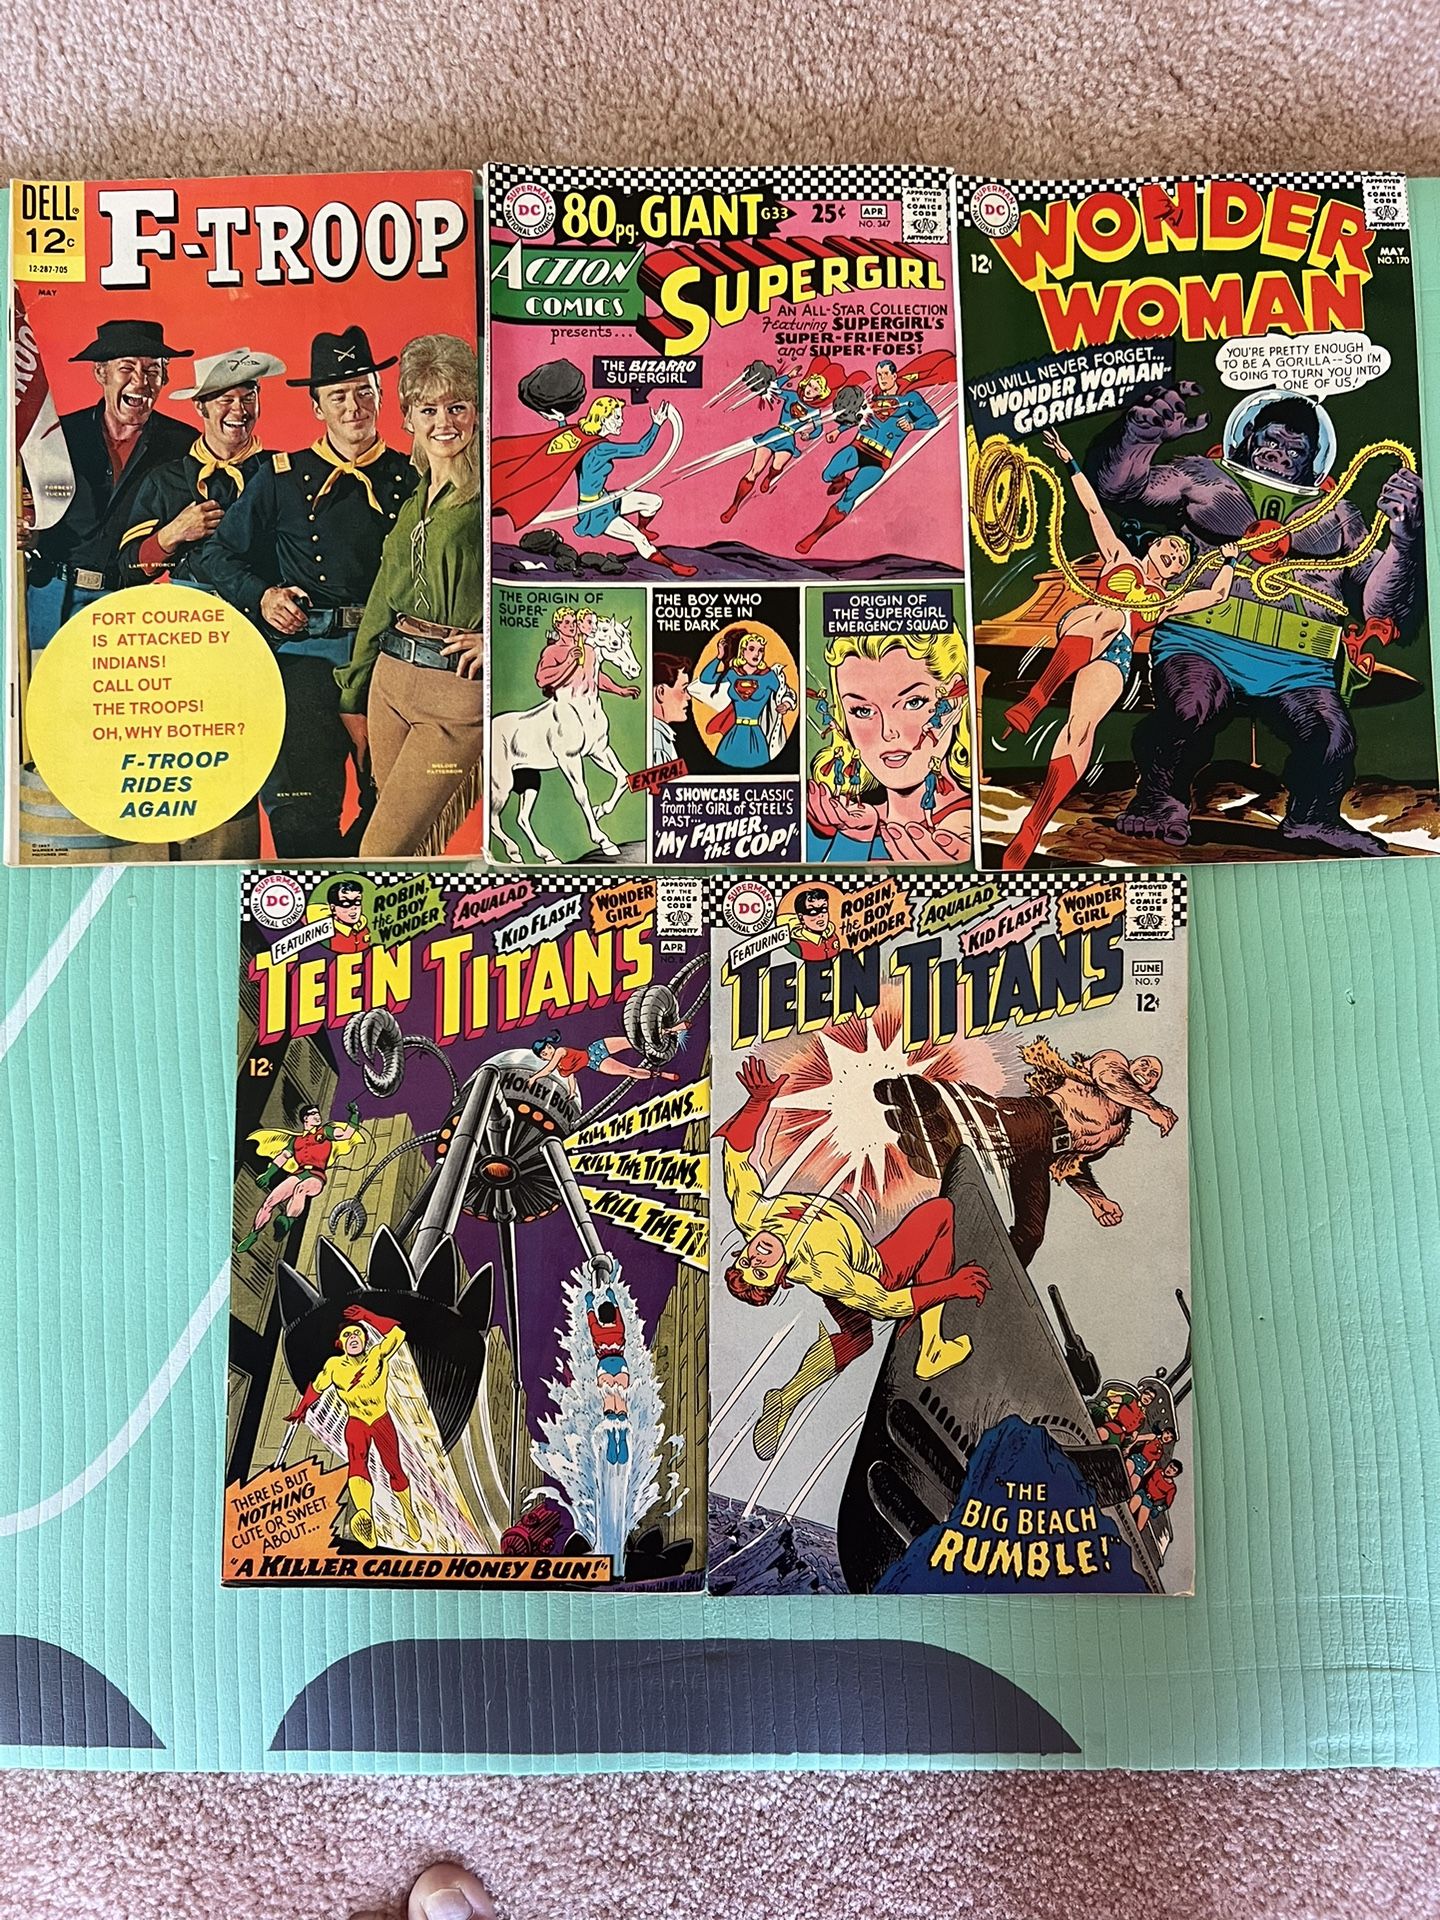 5 Vintage Comics,1966-67 